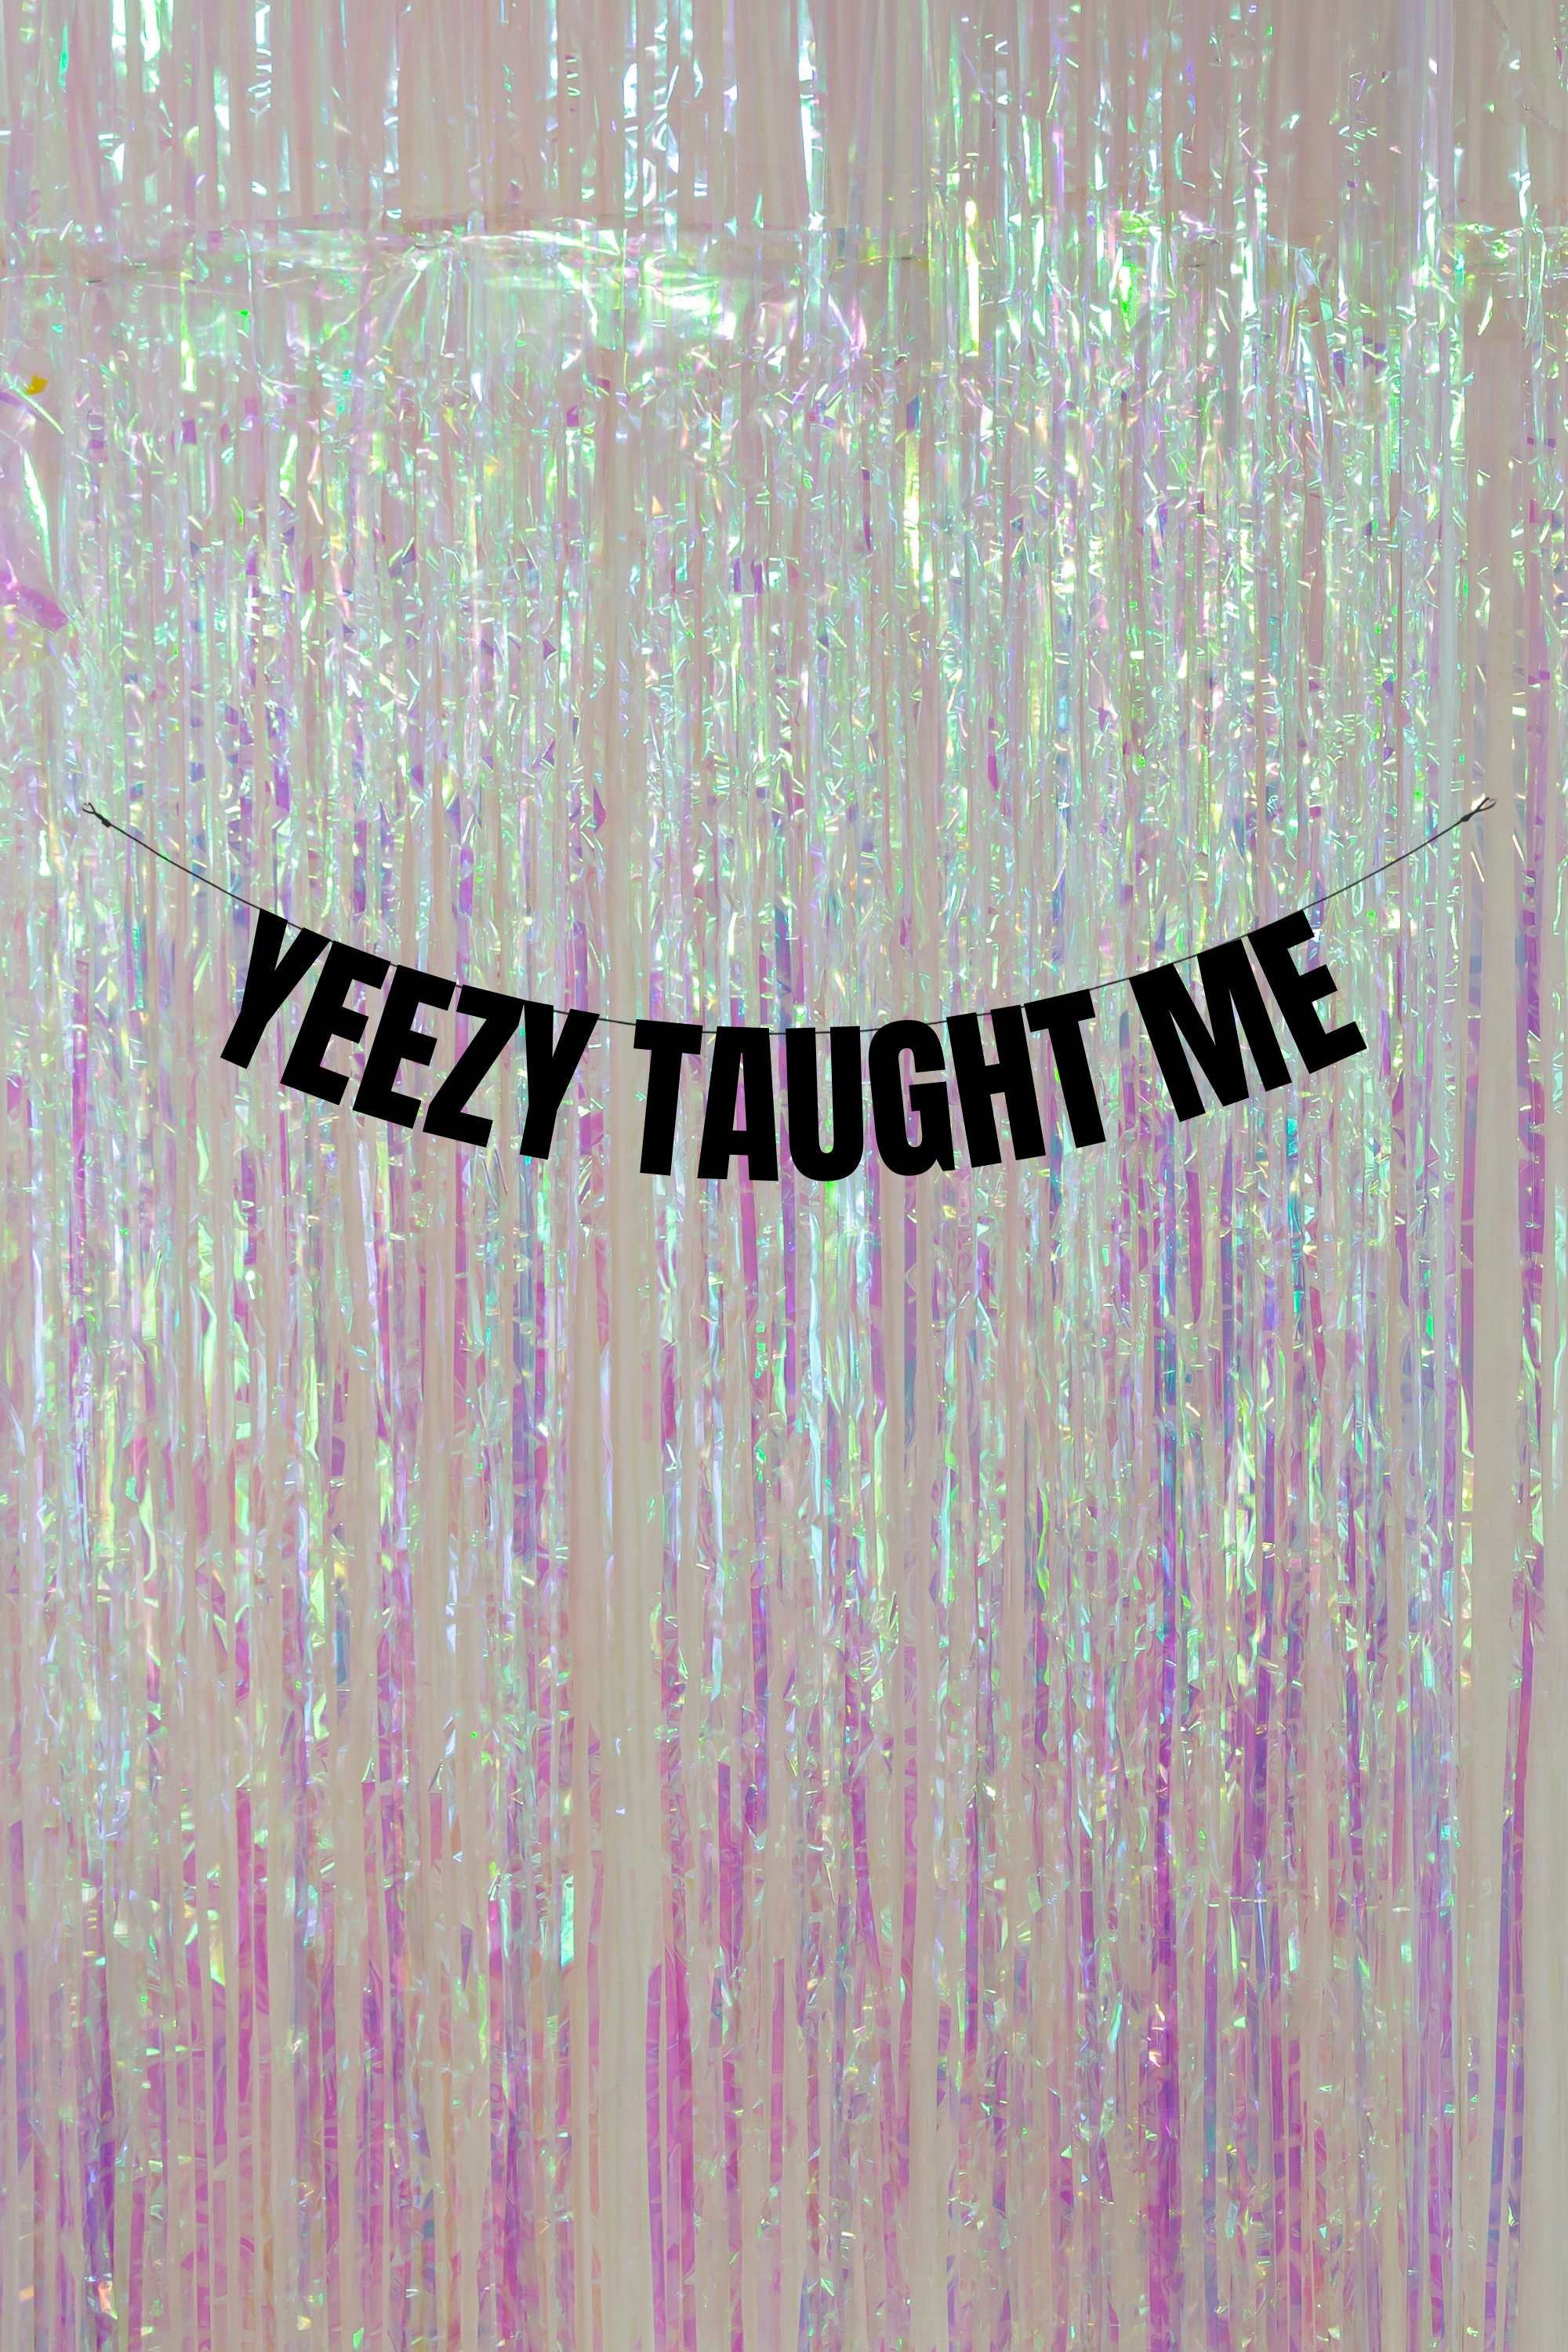 KANYE Yeezy Taught Me. Kanye West Birthday Banner. Yeezy - Etsy